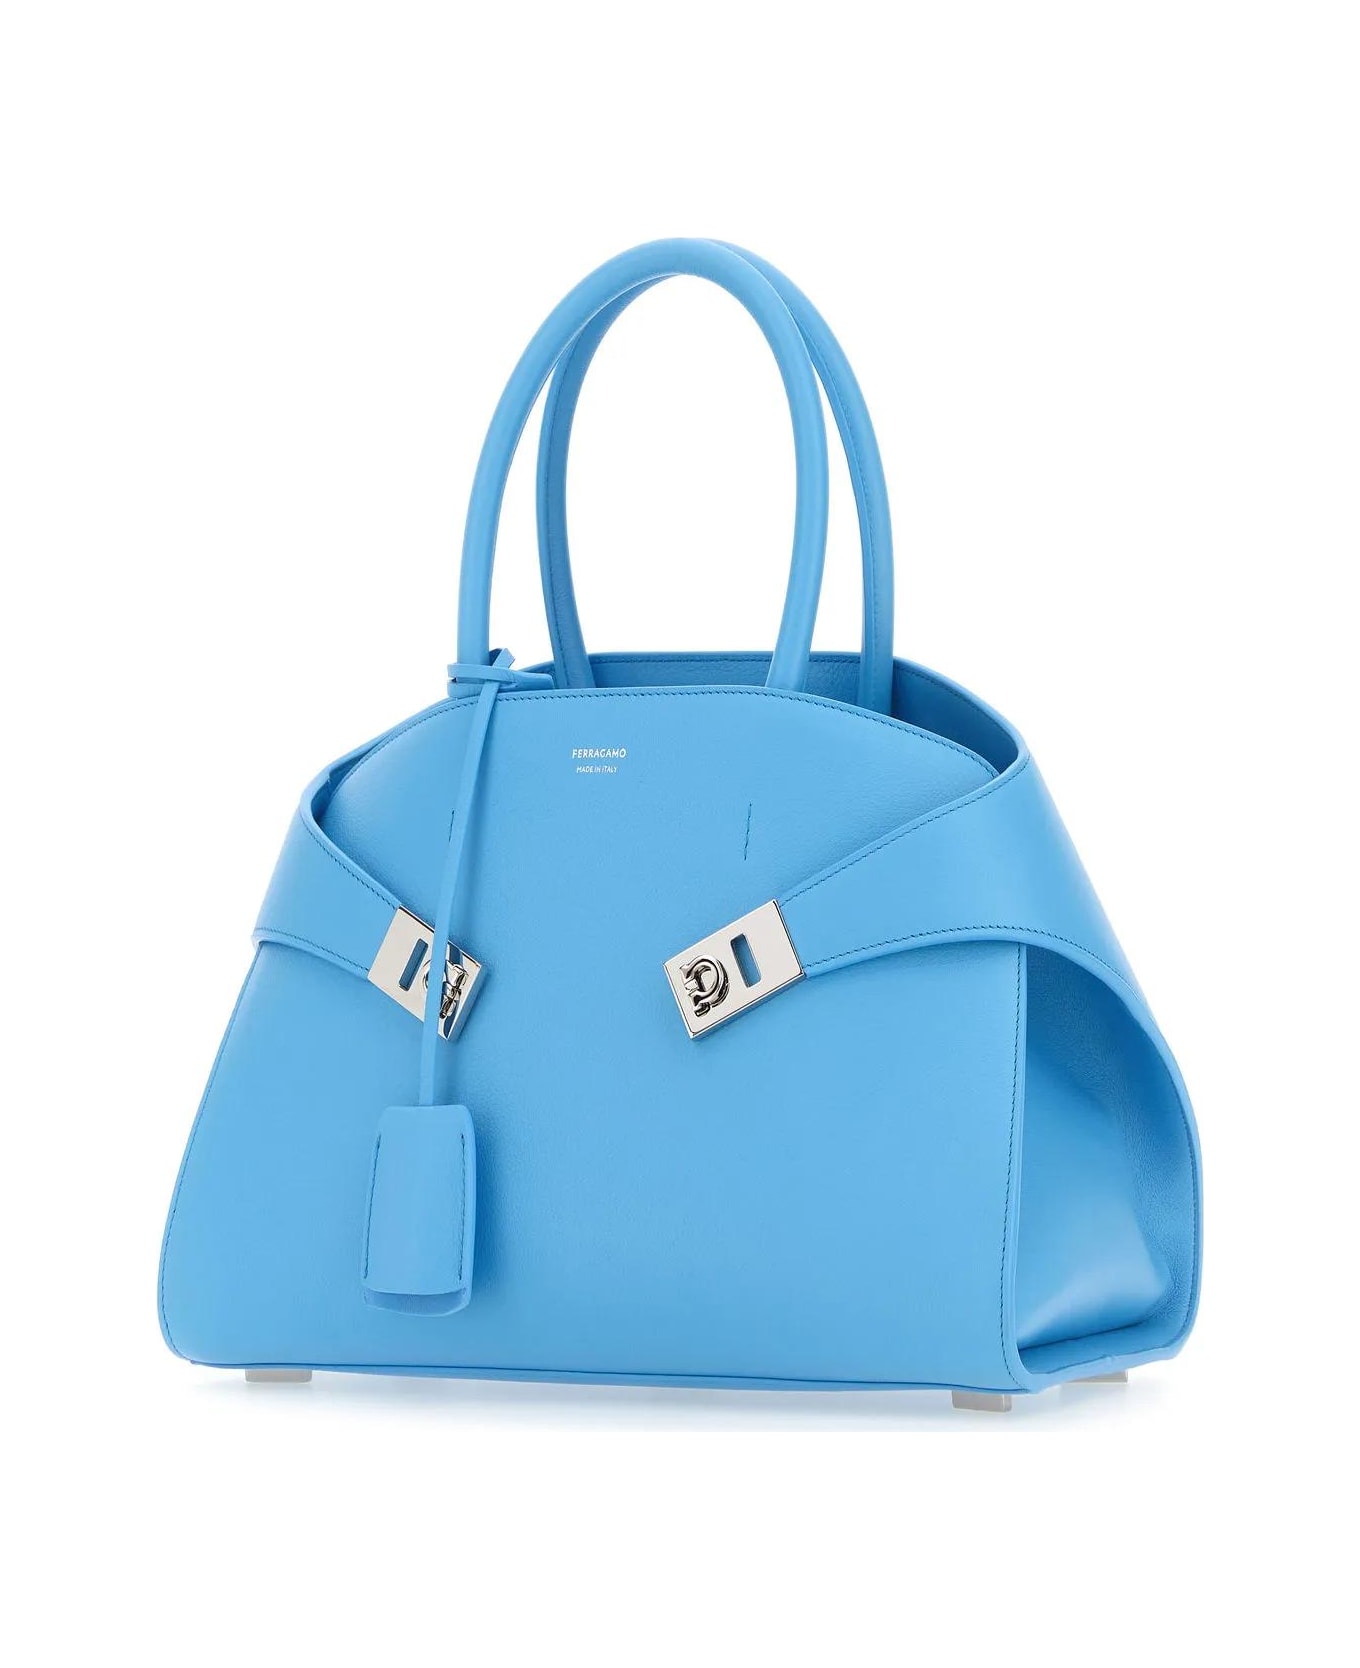 Ferragamo Turquoise Leather Small Hug Handbag - Gnawed Blue